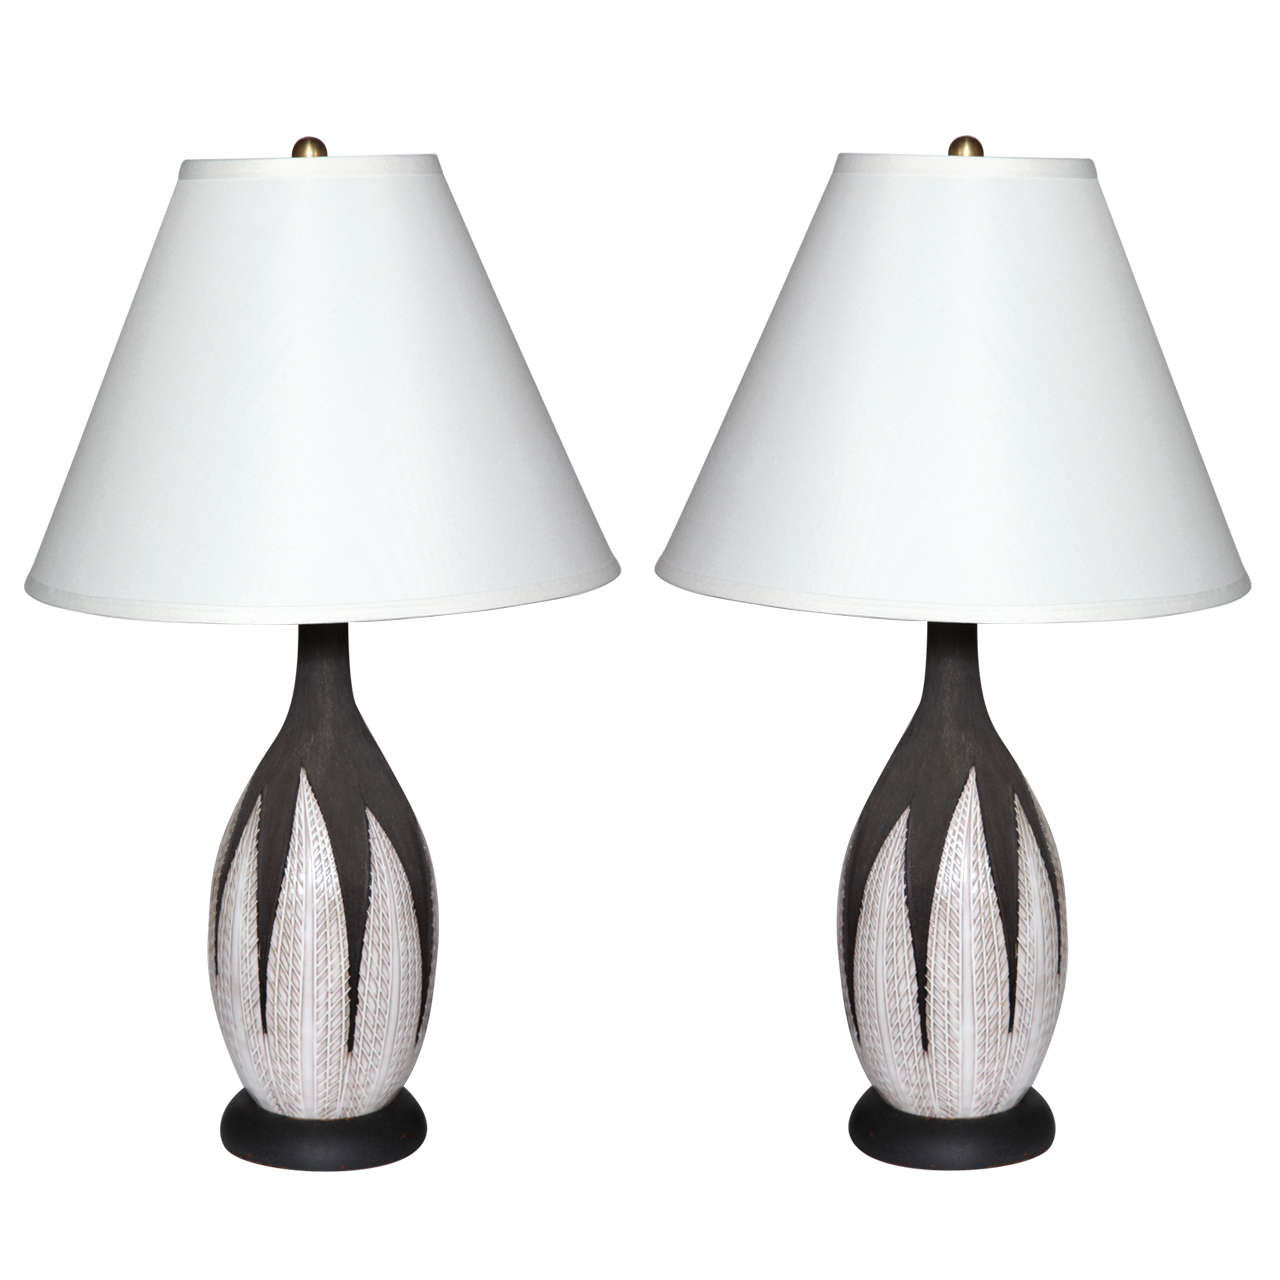 Pair of Anna-Lisa Thomson "Paprika" Black & White Ceramic Table Lamps, C. 1950's